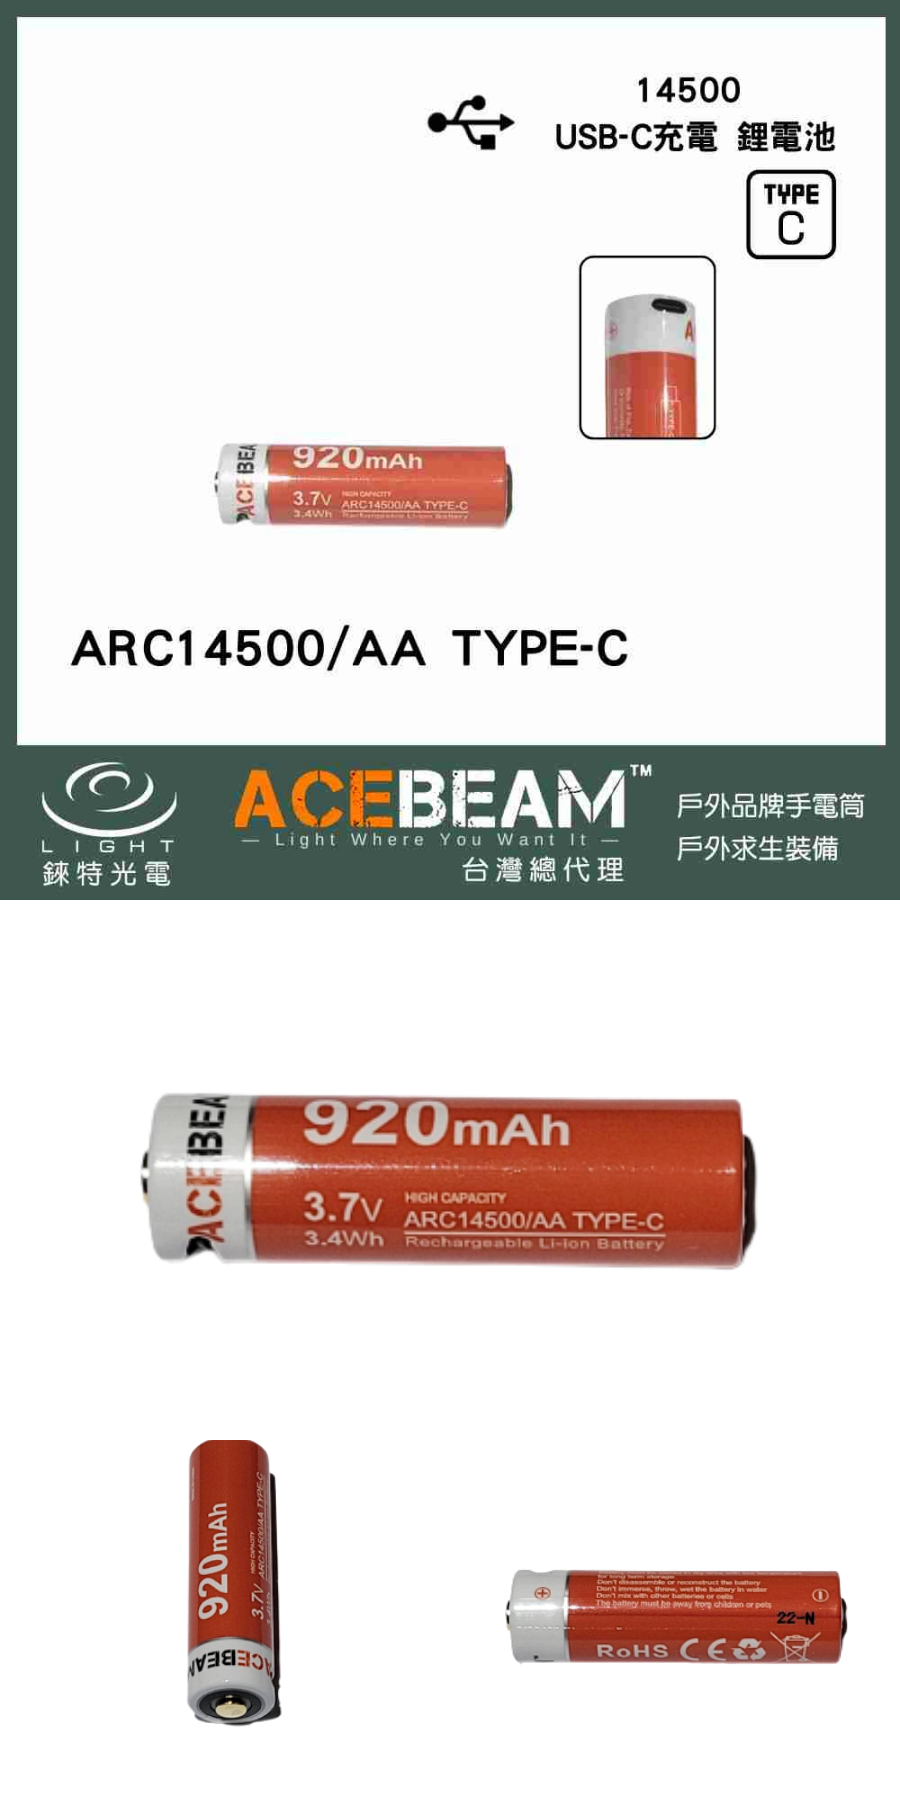 Acebeam 920mAh 14500 Battery USB Rechargeable